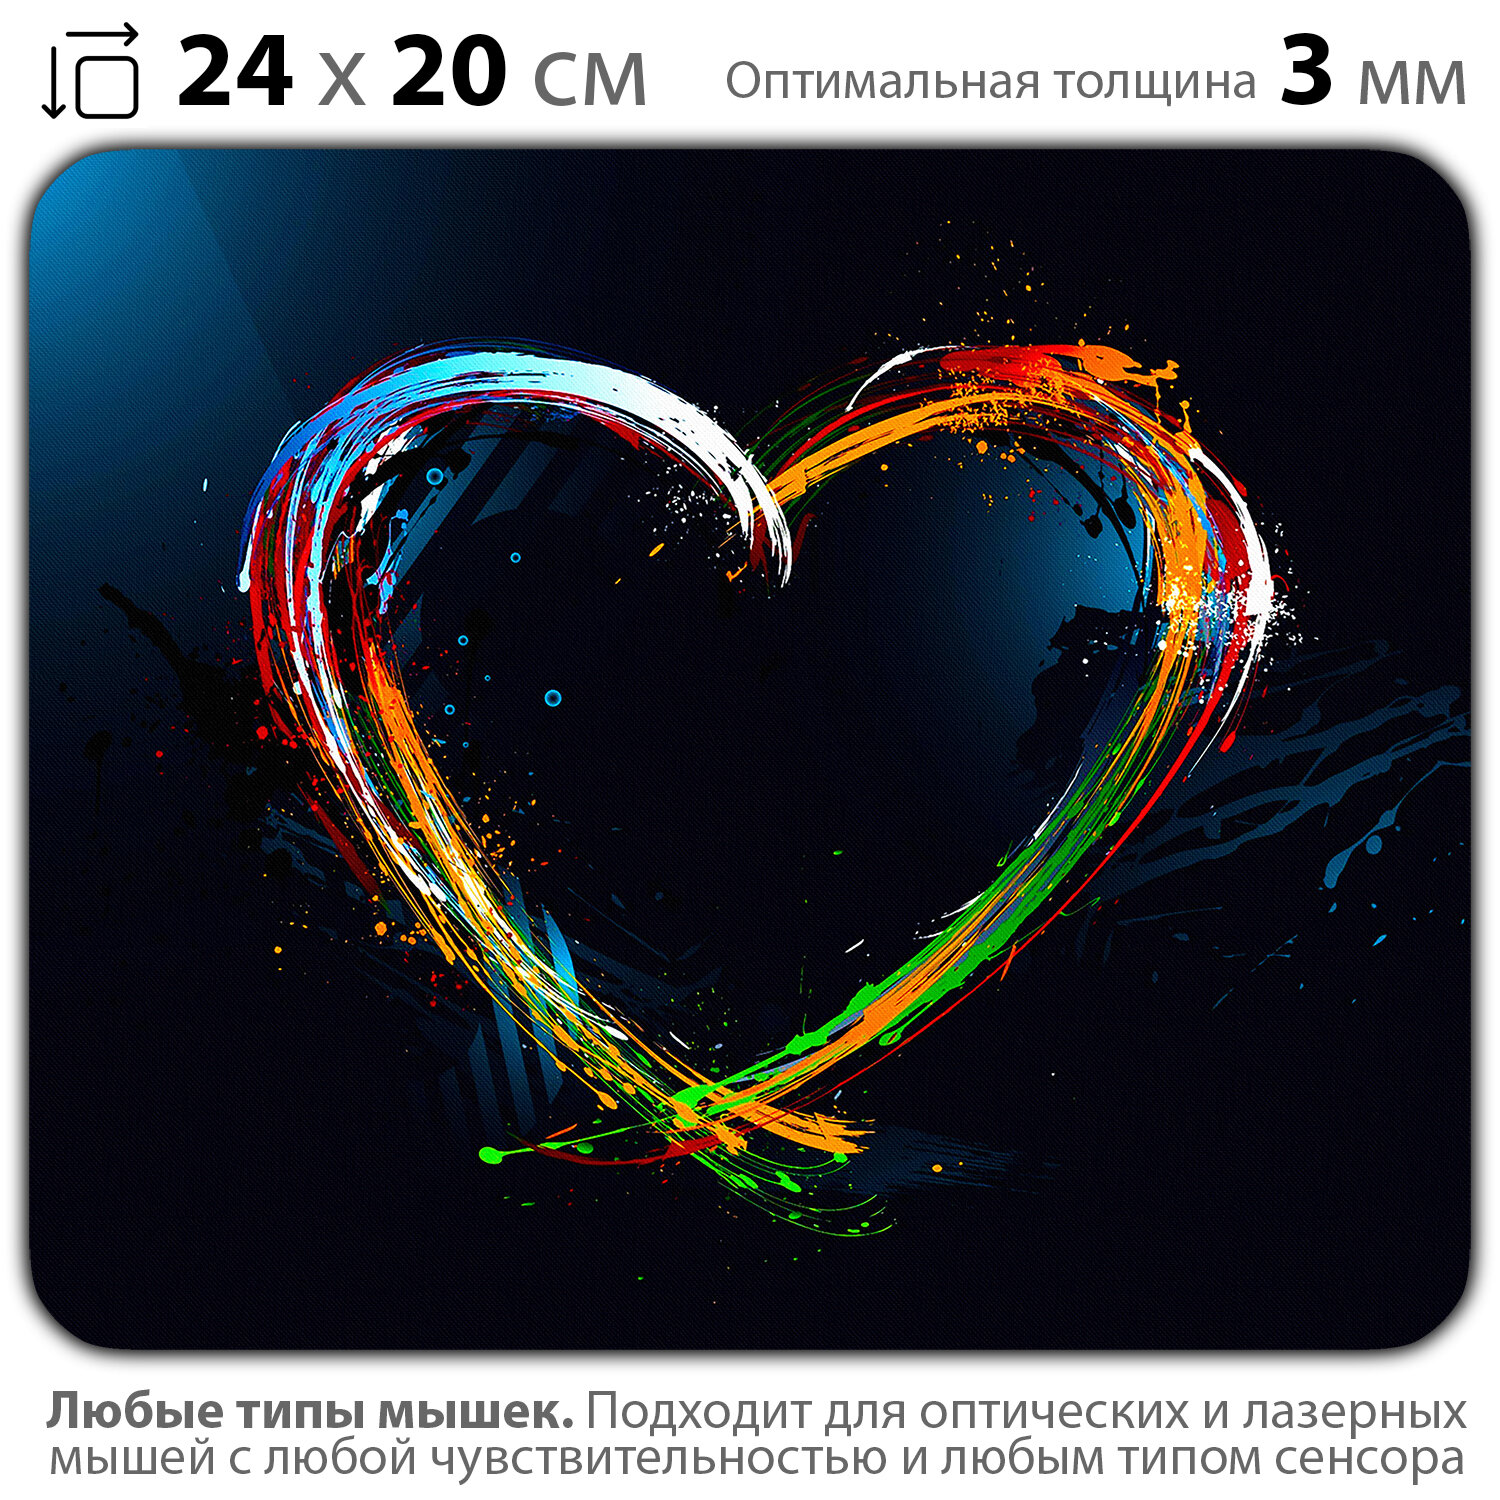 Коврик для мыши "Разноцветное сердце" (24 x 20 см x 3 мм)